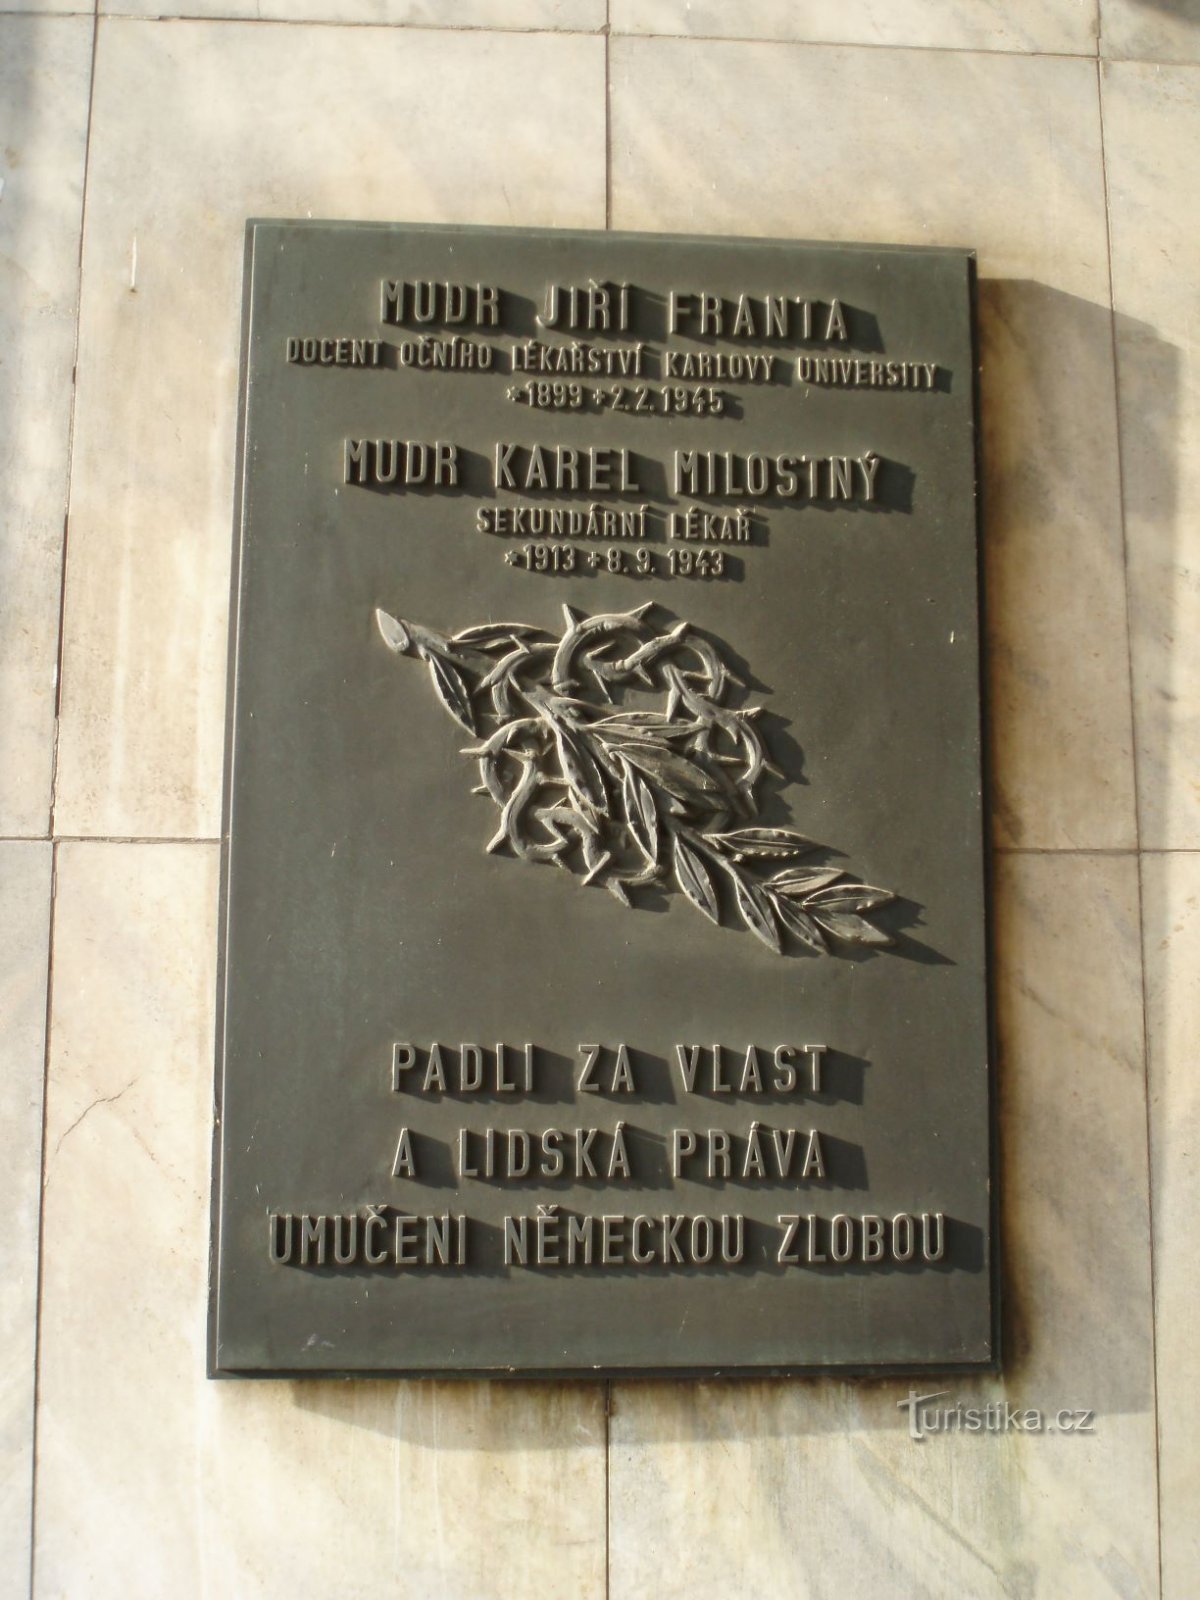 Gedenkplaten in het Hradec Králové Universitair Ziekenhuis (29.11.2011 november XNUMX)